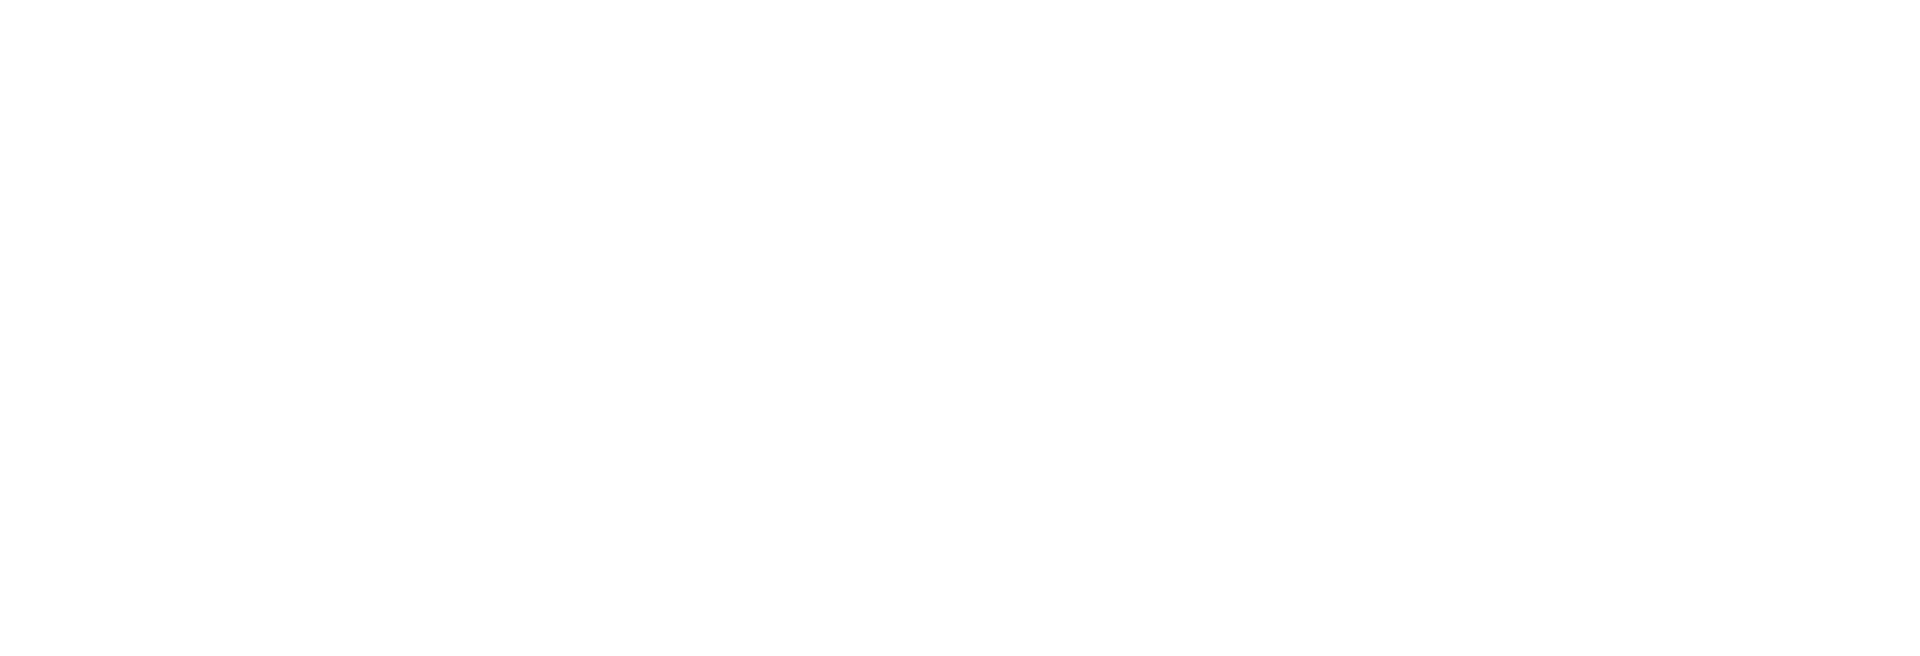 Guada-Coma Mechanical Inc logo